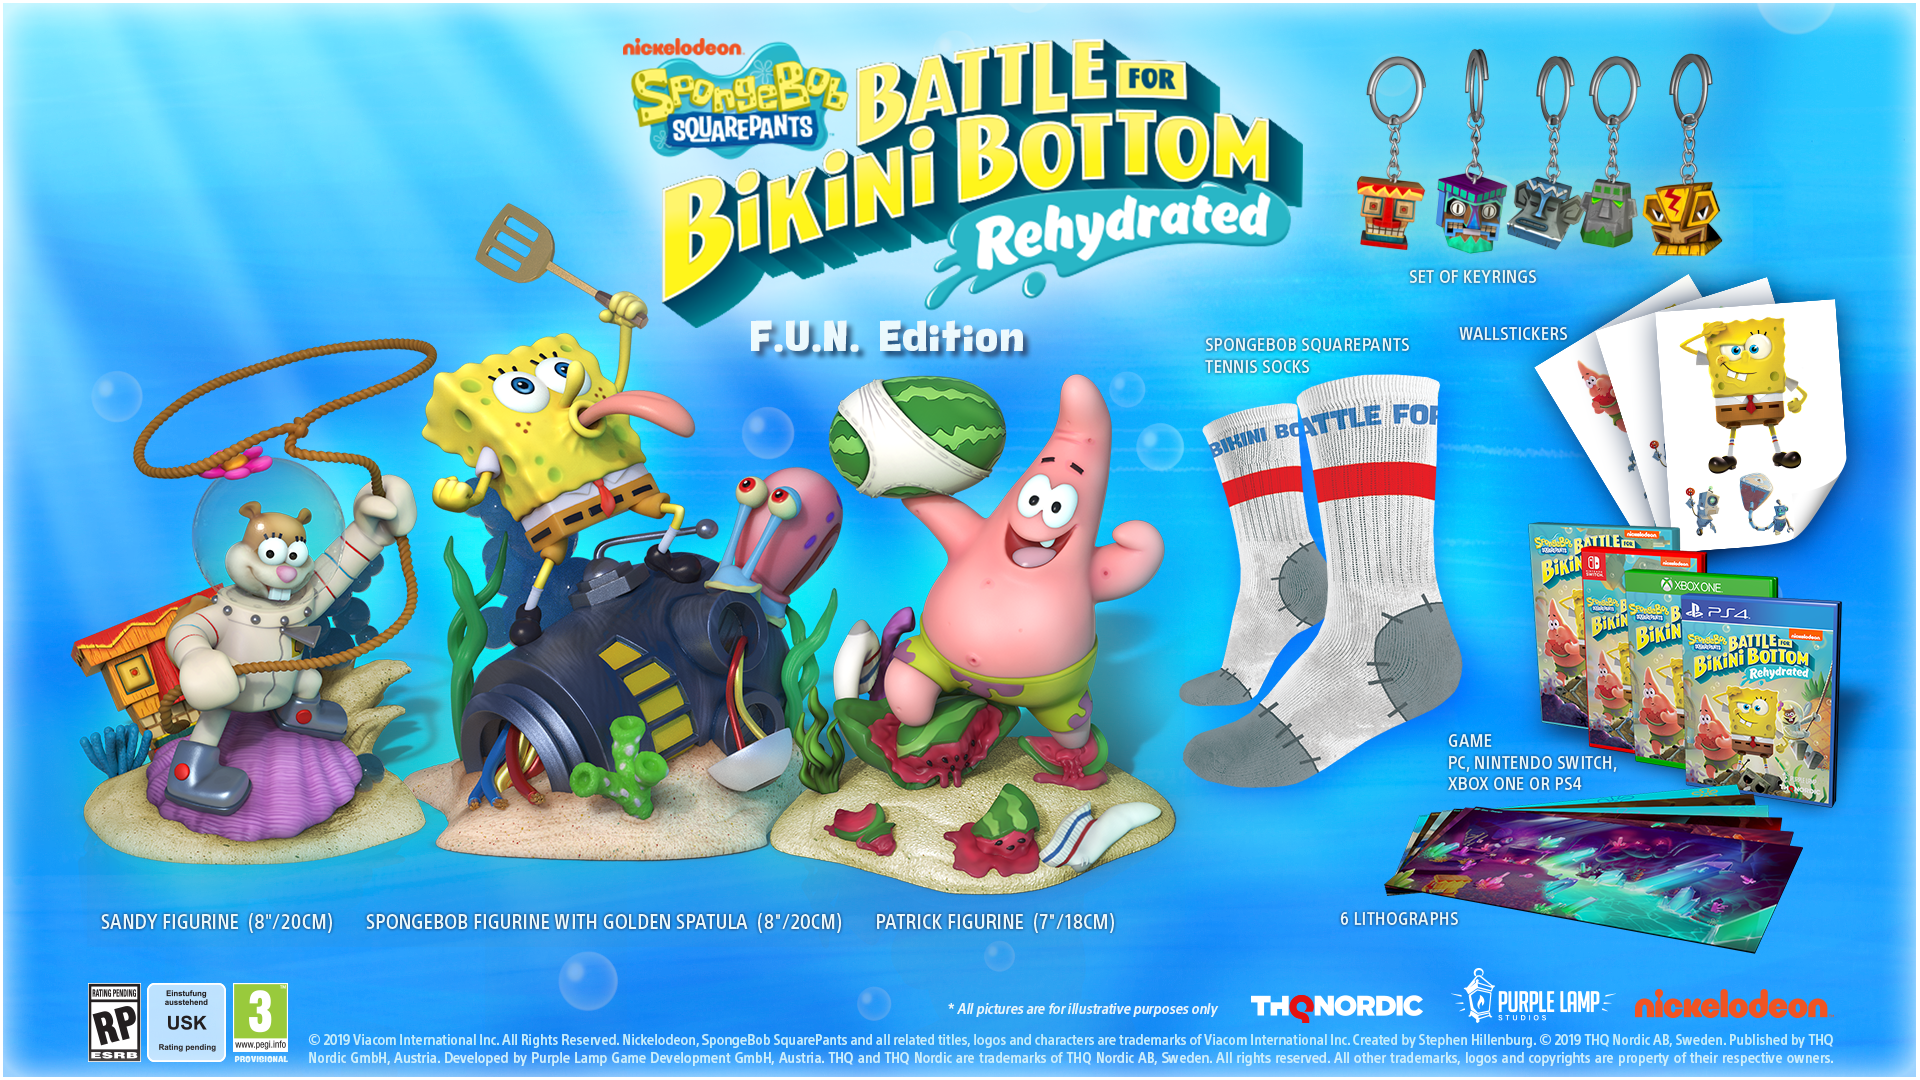 Spongebob SquarePants: Battle for Bikini Bottom - Fun Edition